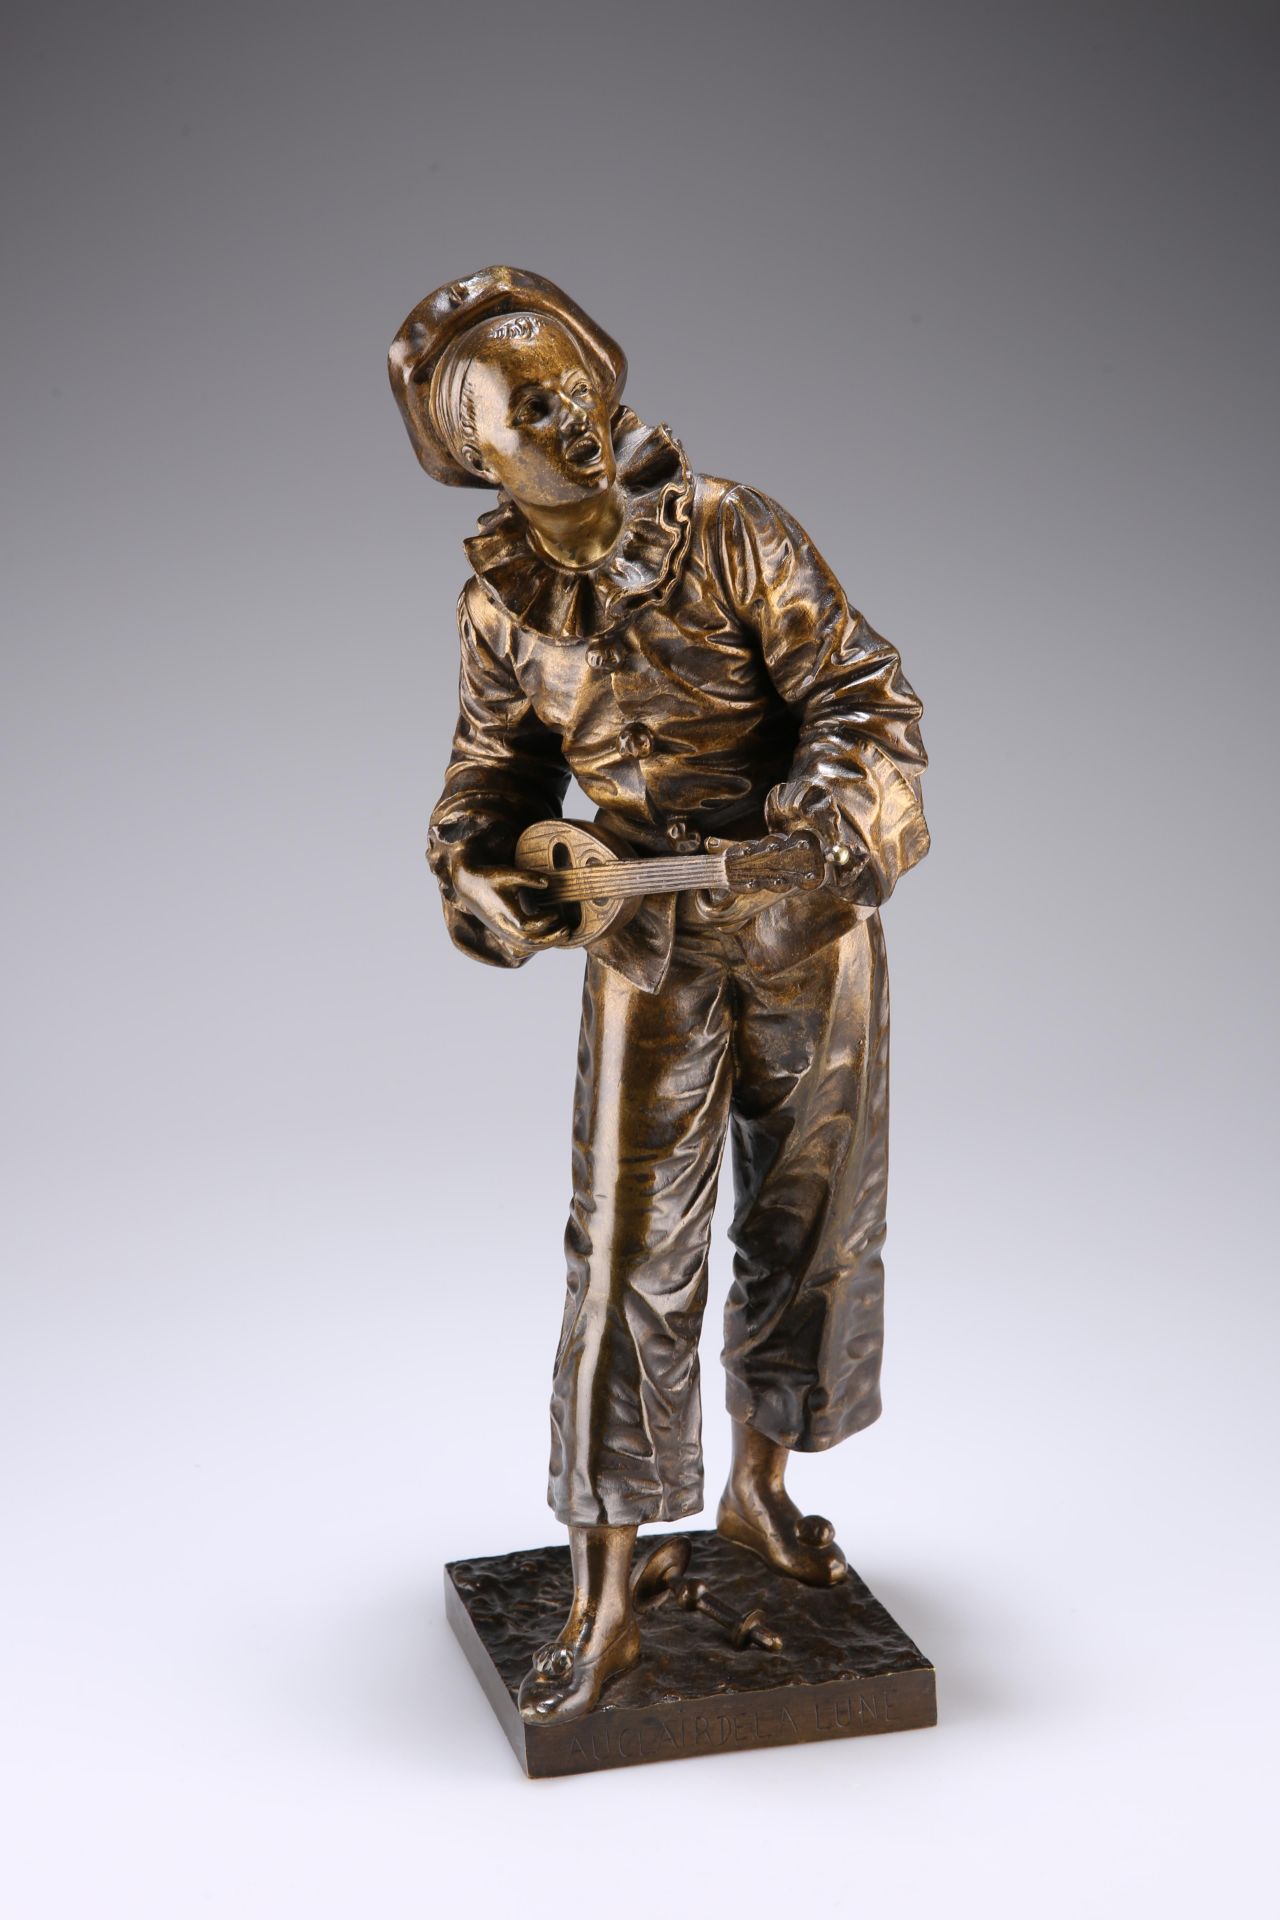 EUTROPE BOURET, "AU CLAIR DE LA LUNE", a patinated bronze of Pierrot playing the mandolin, on a